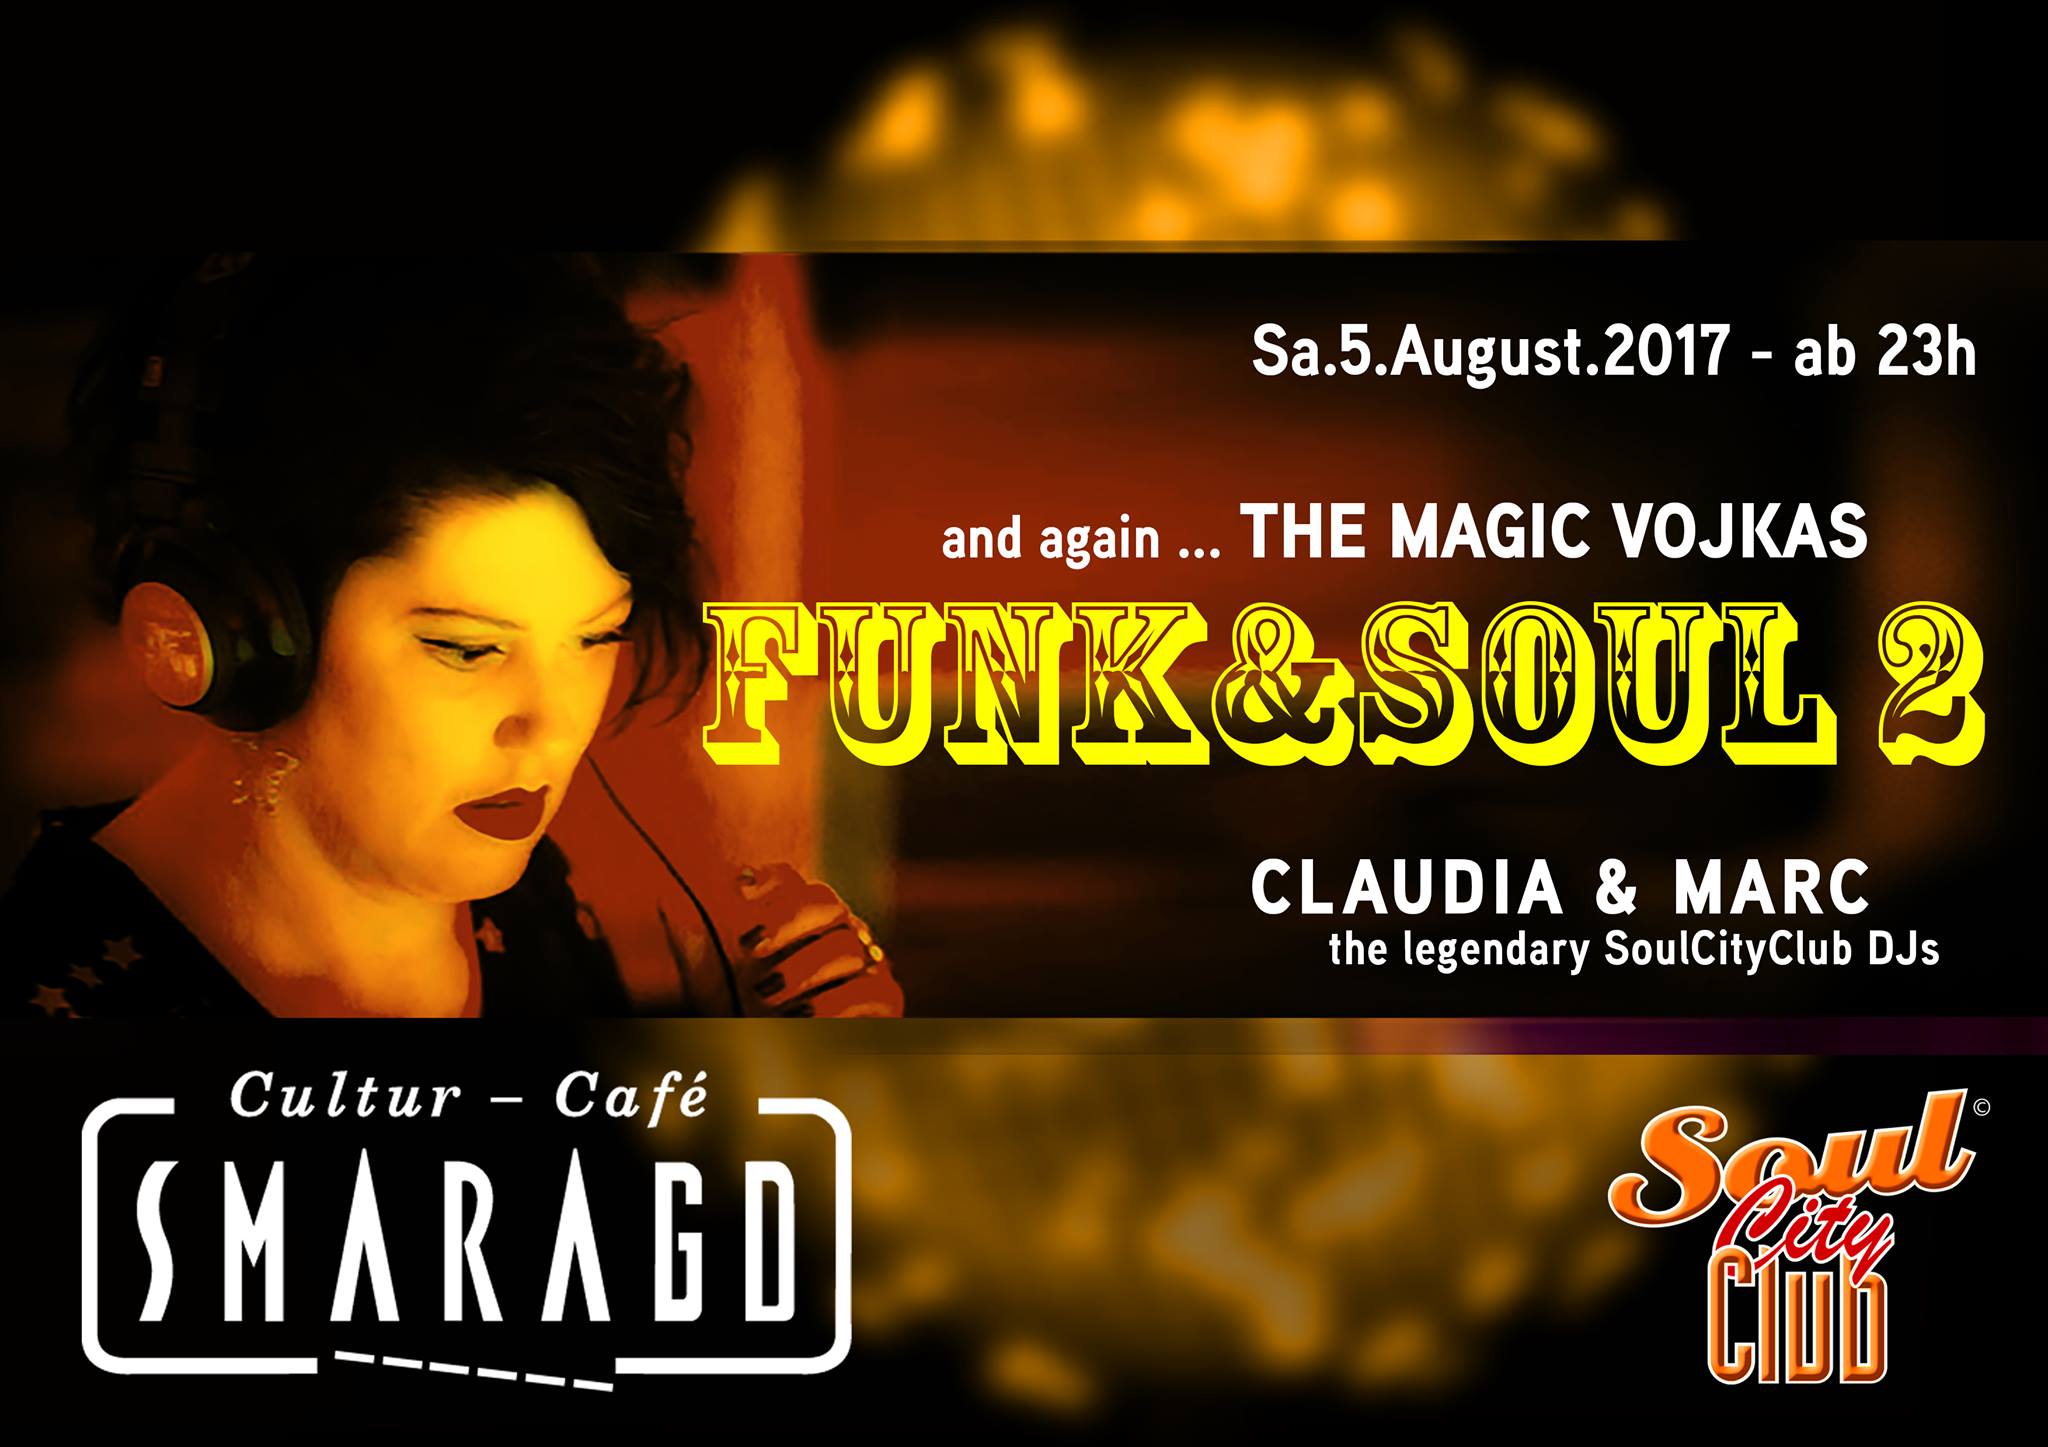 Cultur Cafe Smaragd Linz-Event-MAGIC SOUL CITY CLUB